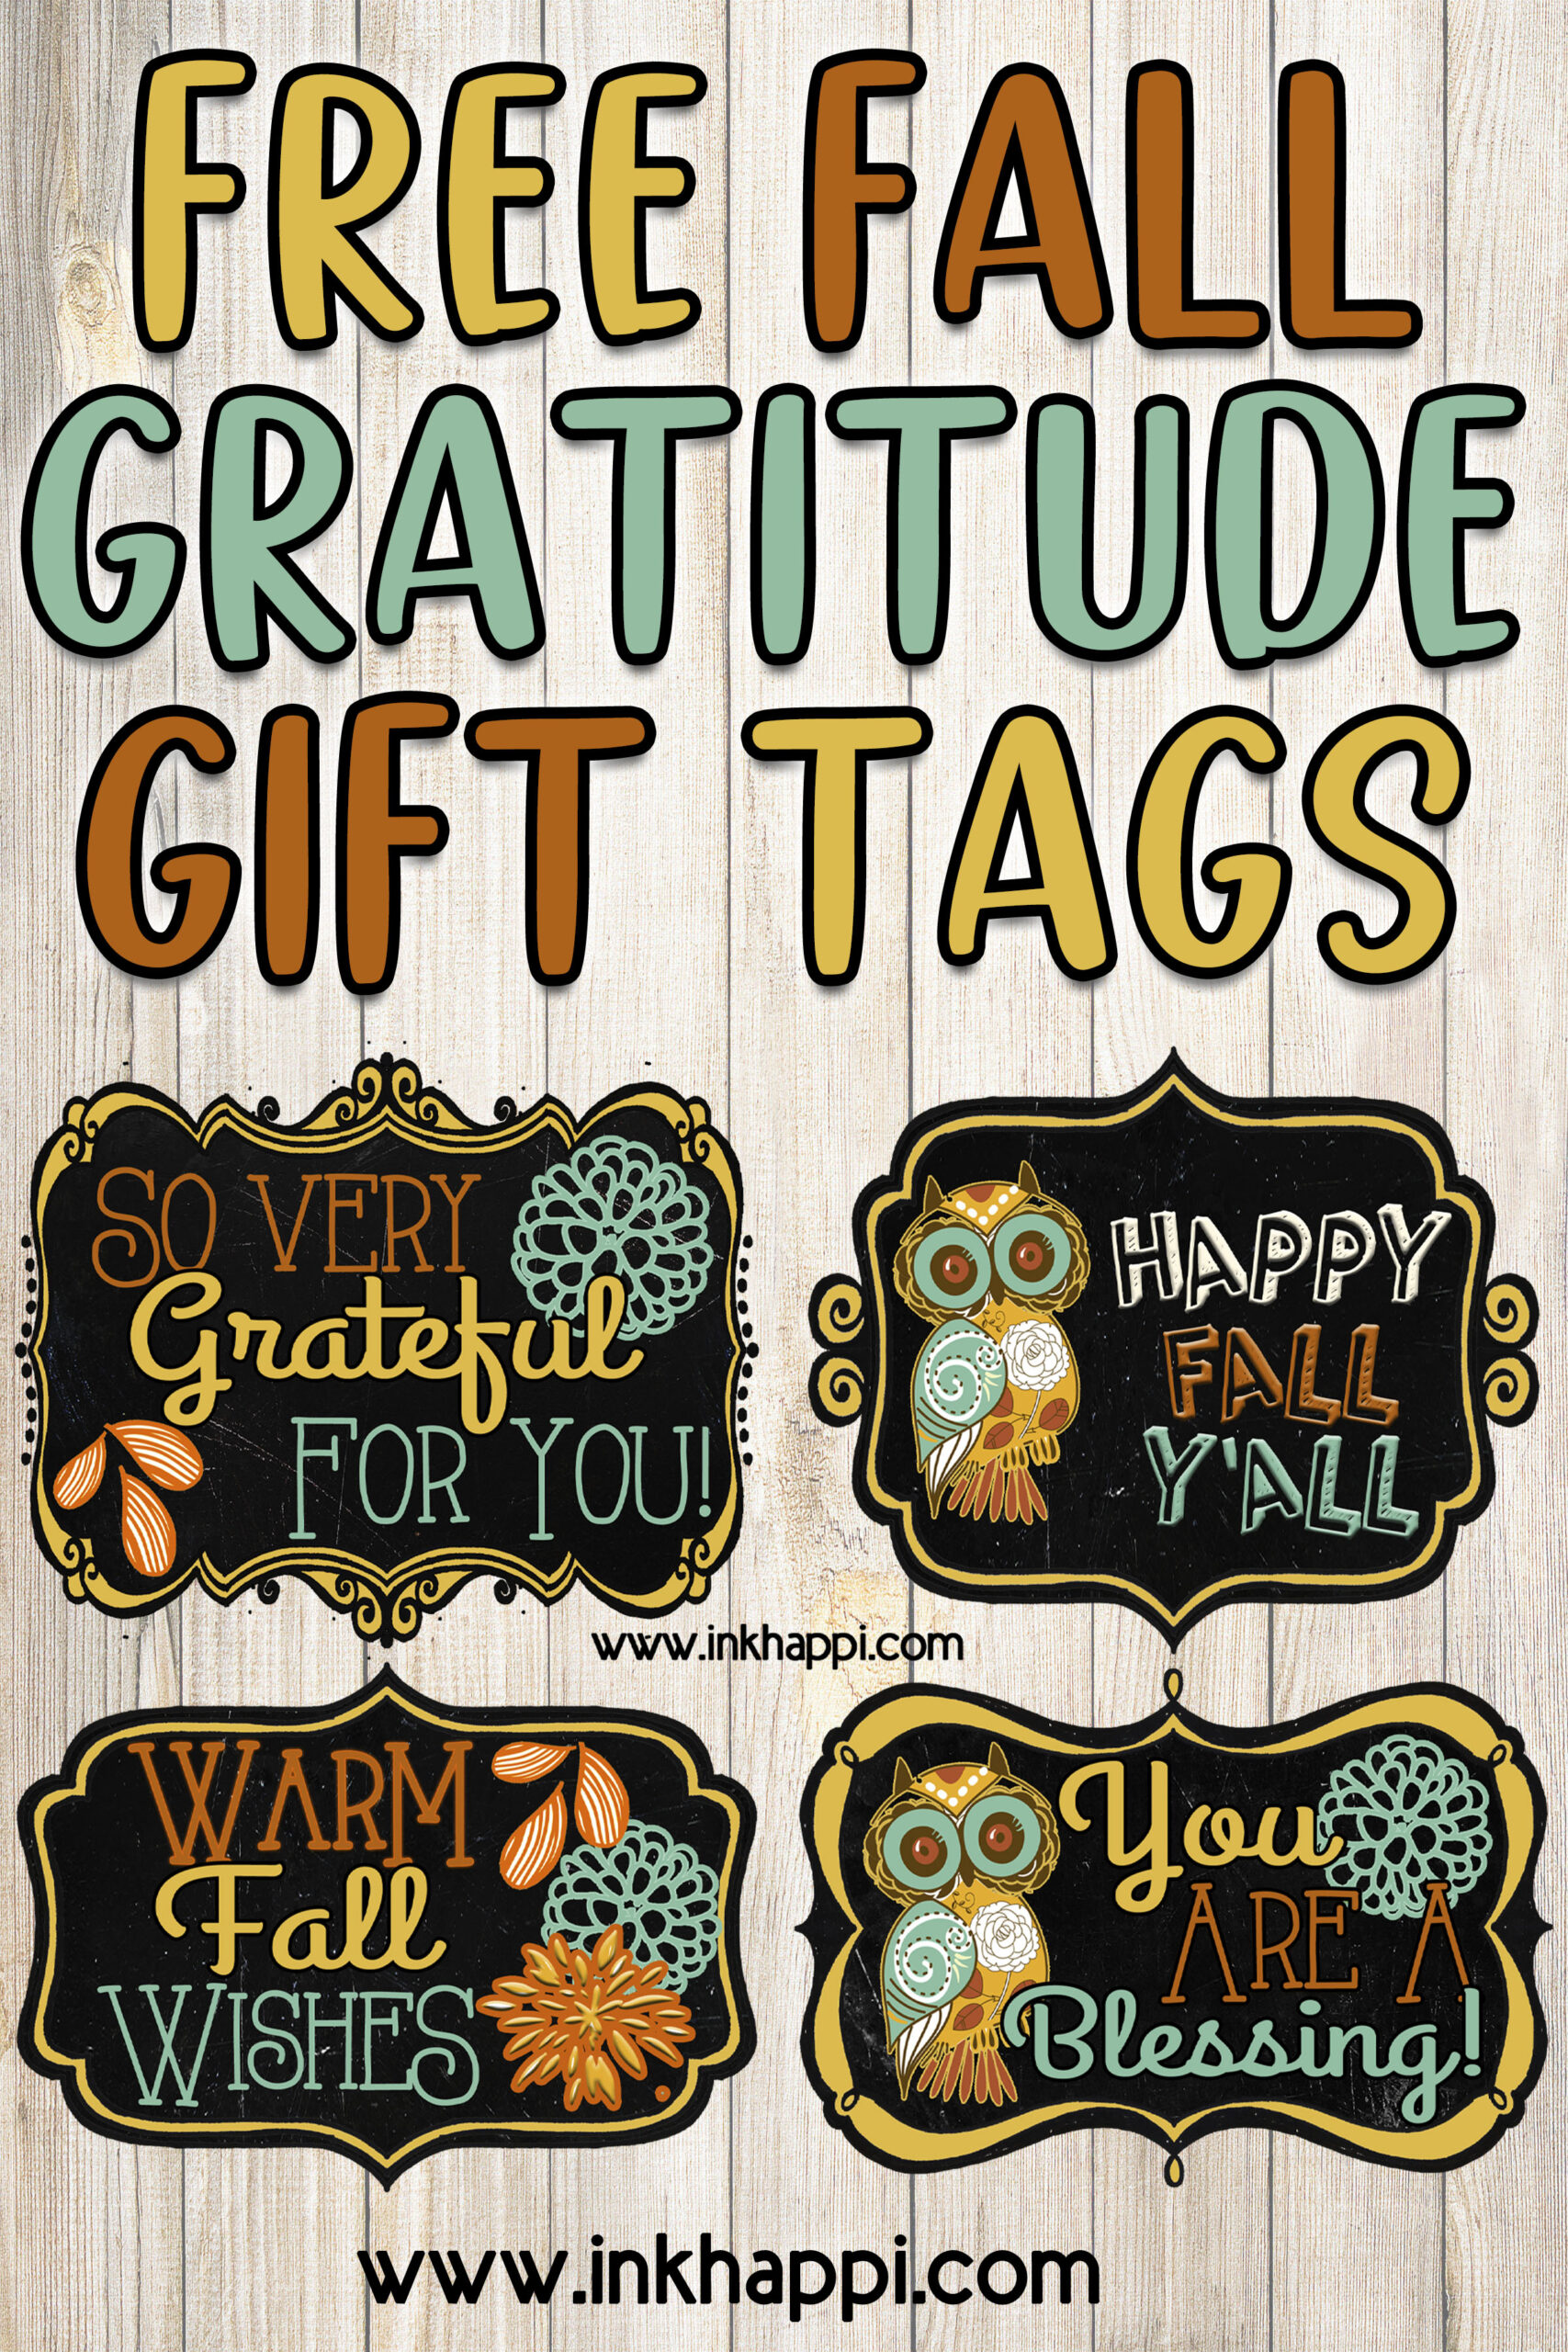 Fall printable gift tags to show your gratitude! inkhappi